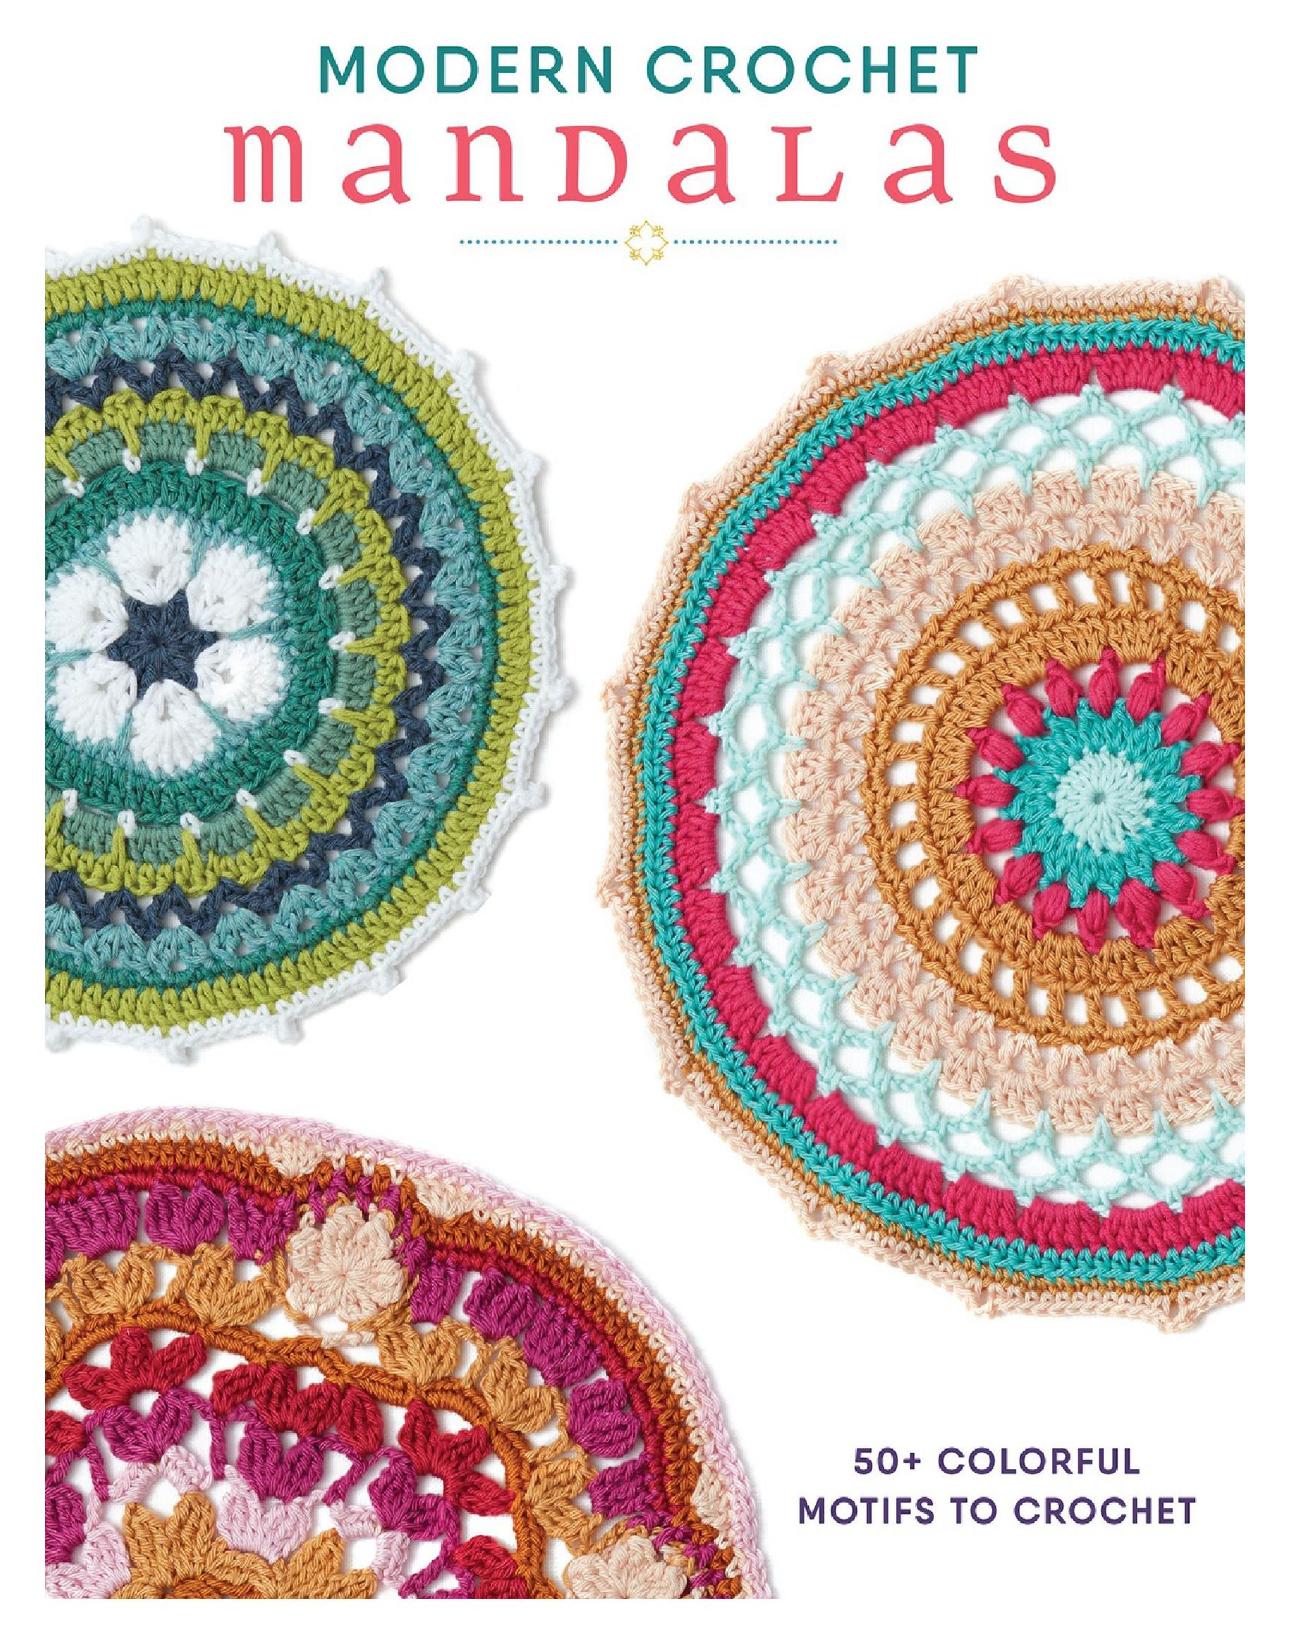 Modern Crochet Mandalas: 50+ Colorful Motifs to Crochet